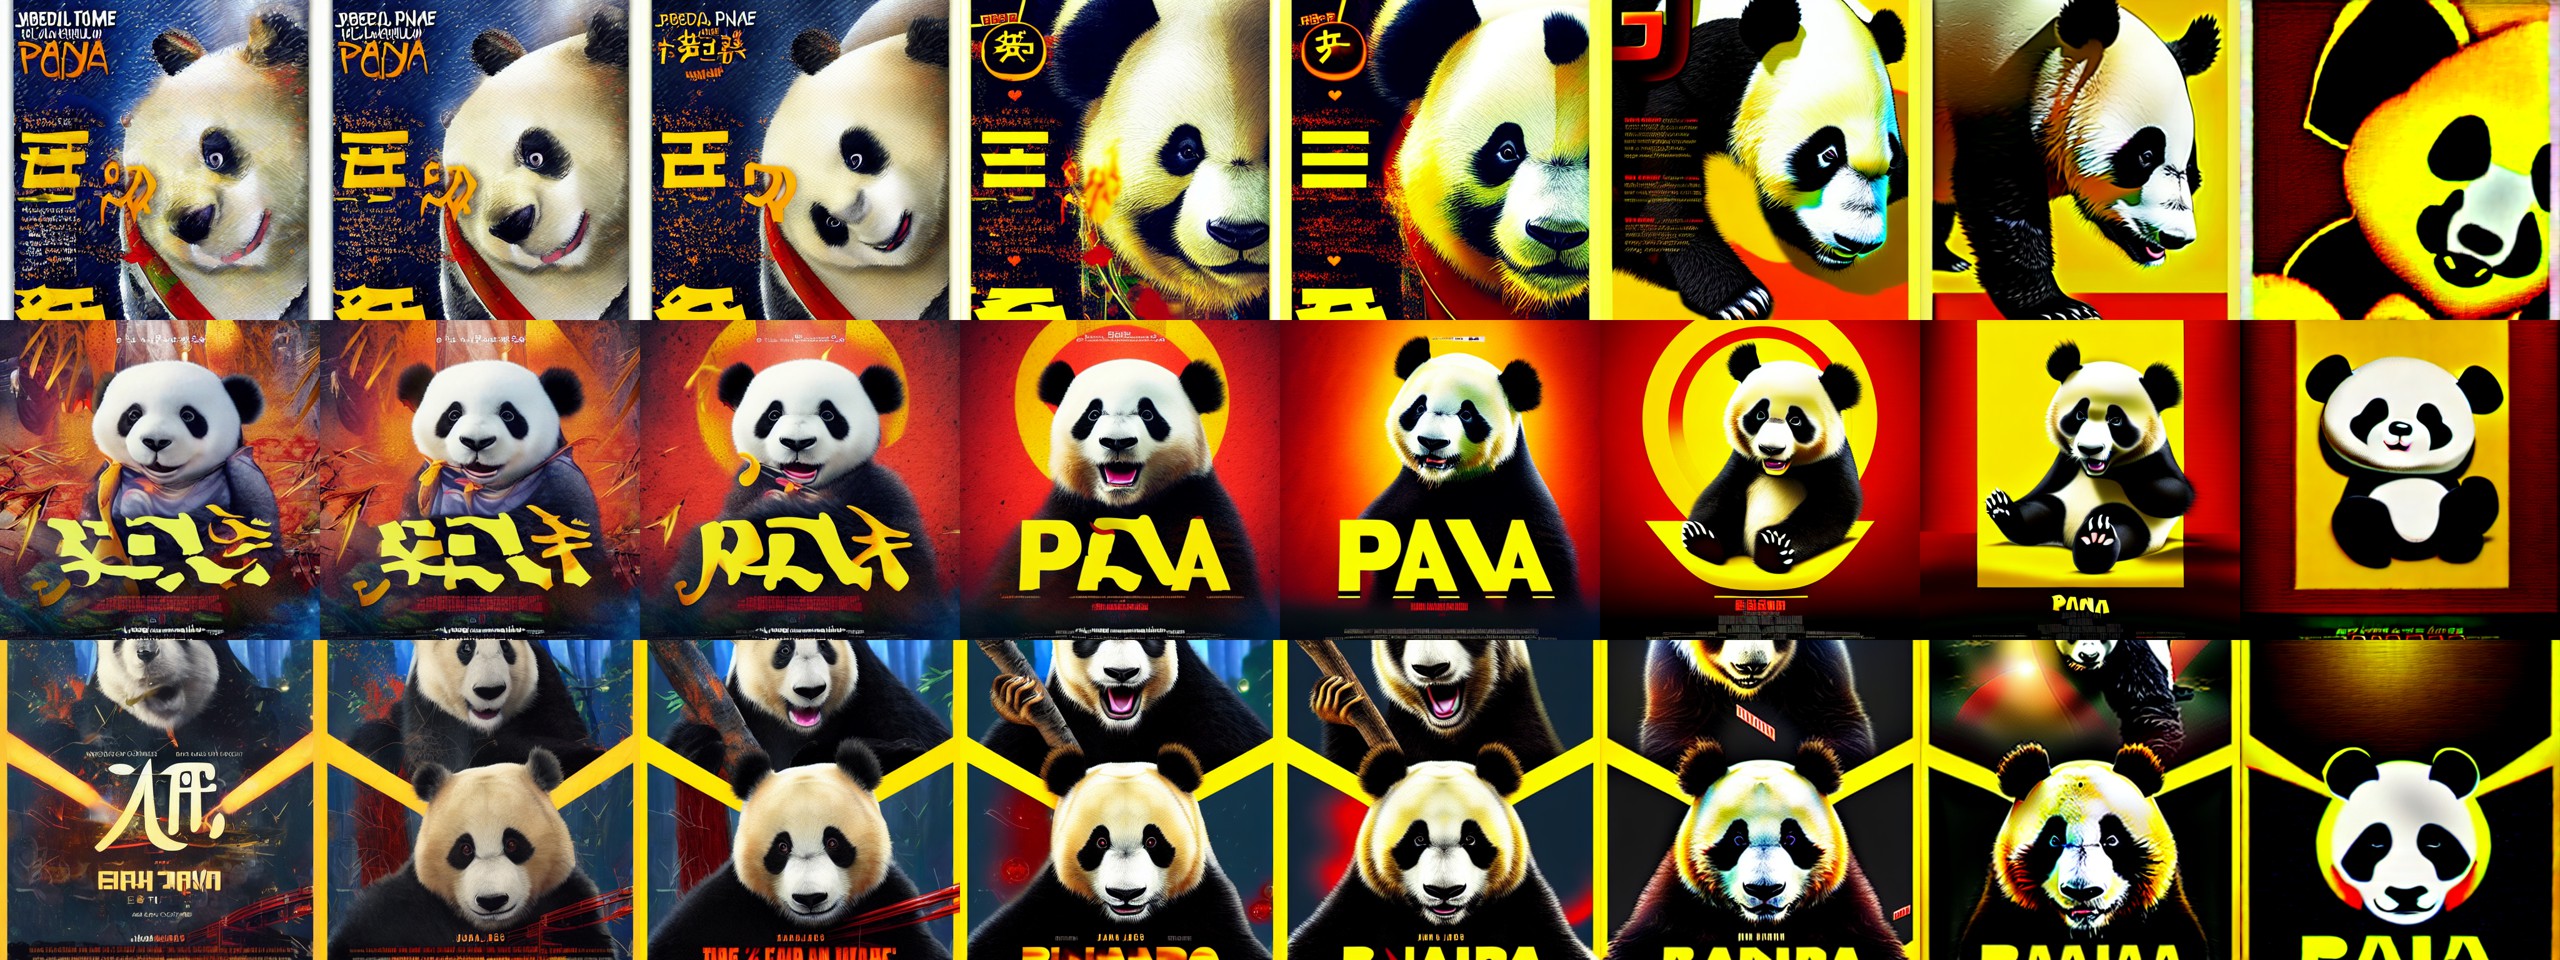 scales_panda_movie_poster_with_yellow_b_kungfu_panda